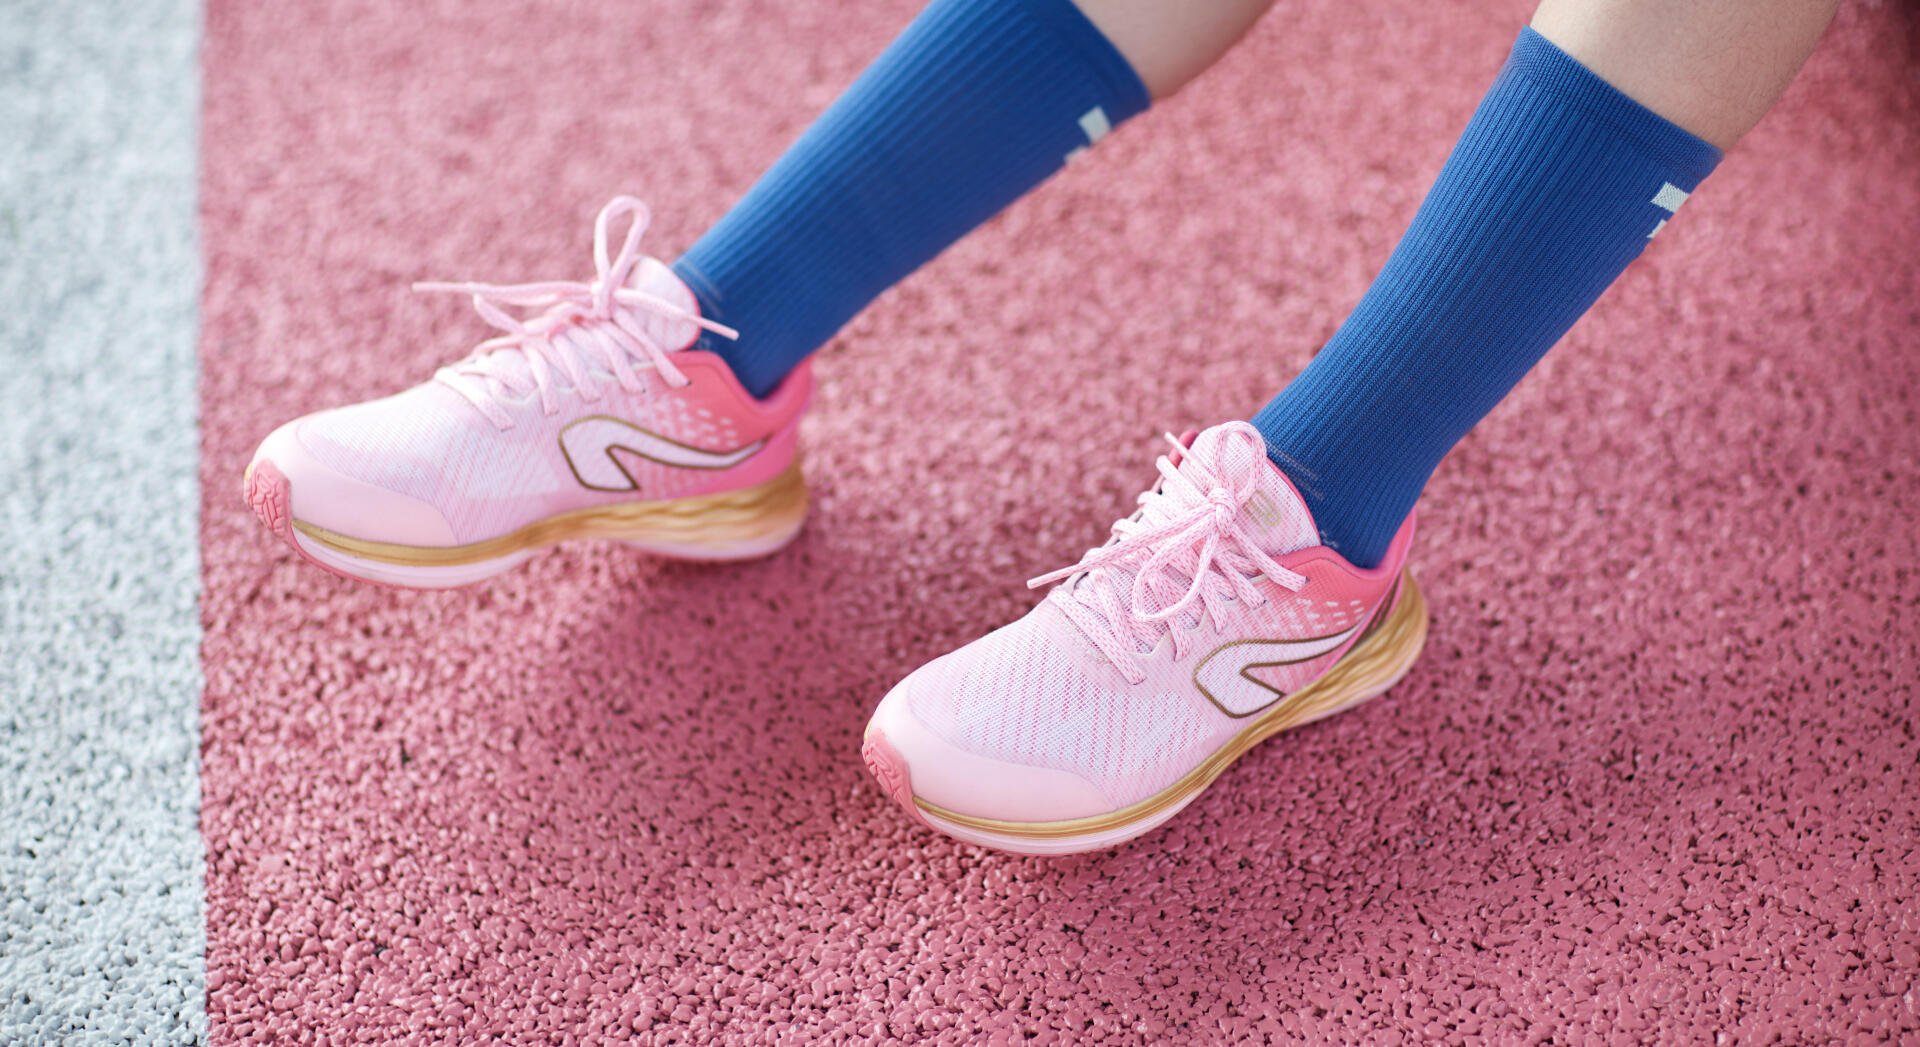 Pourquoi choisir des chaussures de running ?